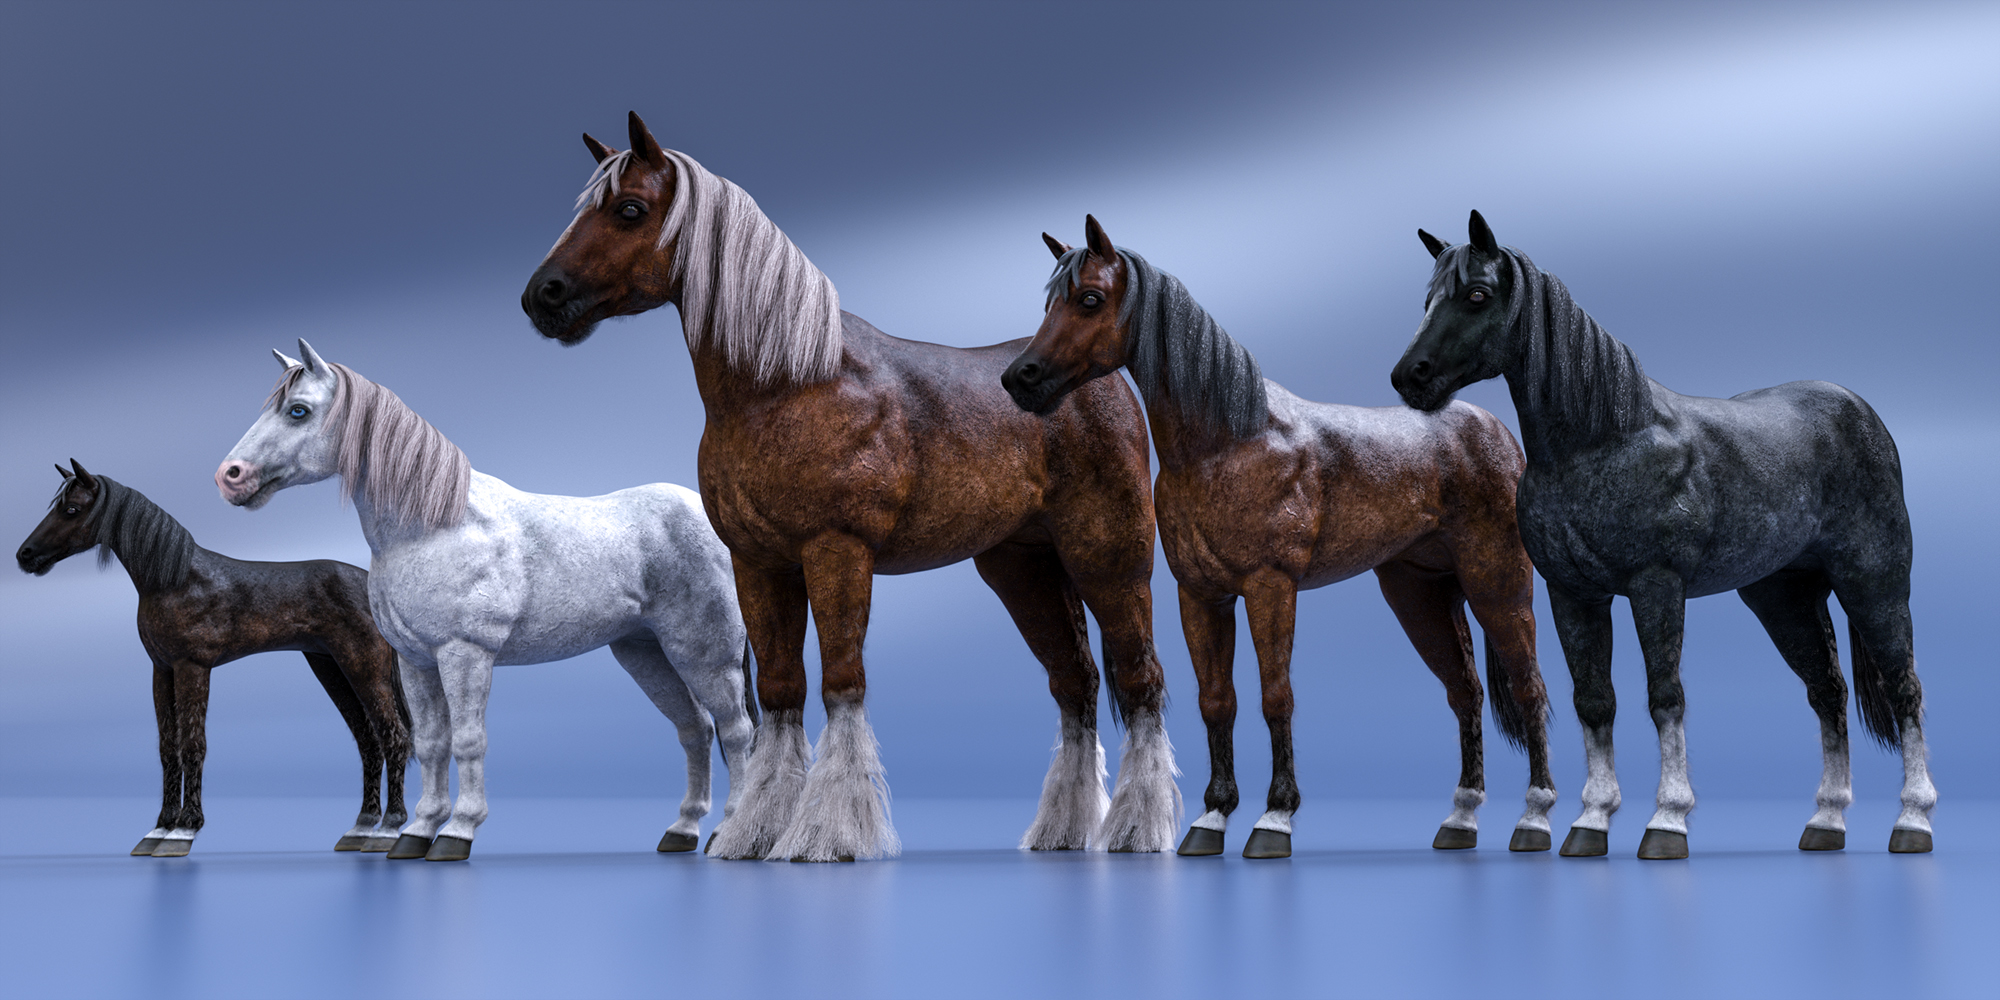 Breeds include foal, Shetland, Shire and Arabian horses